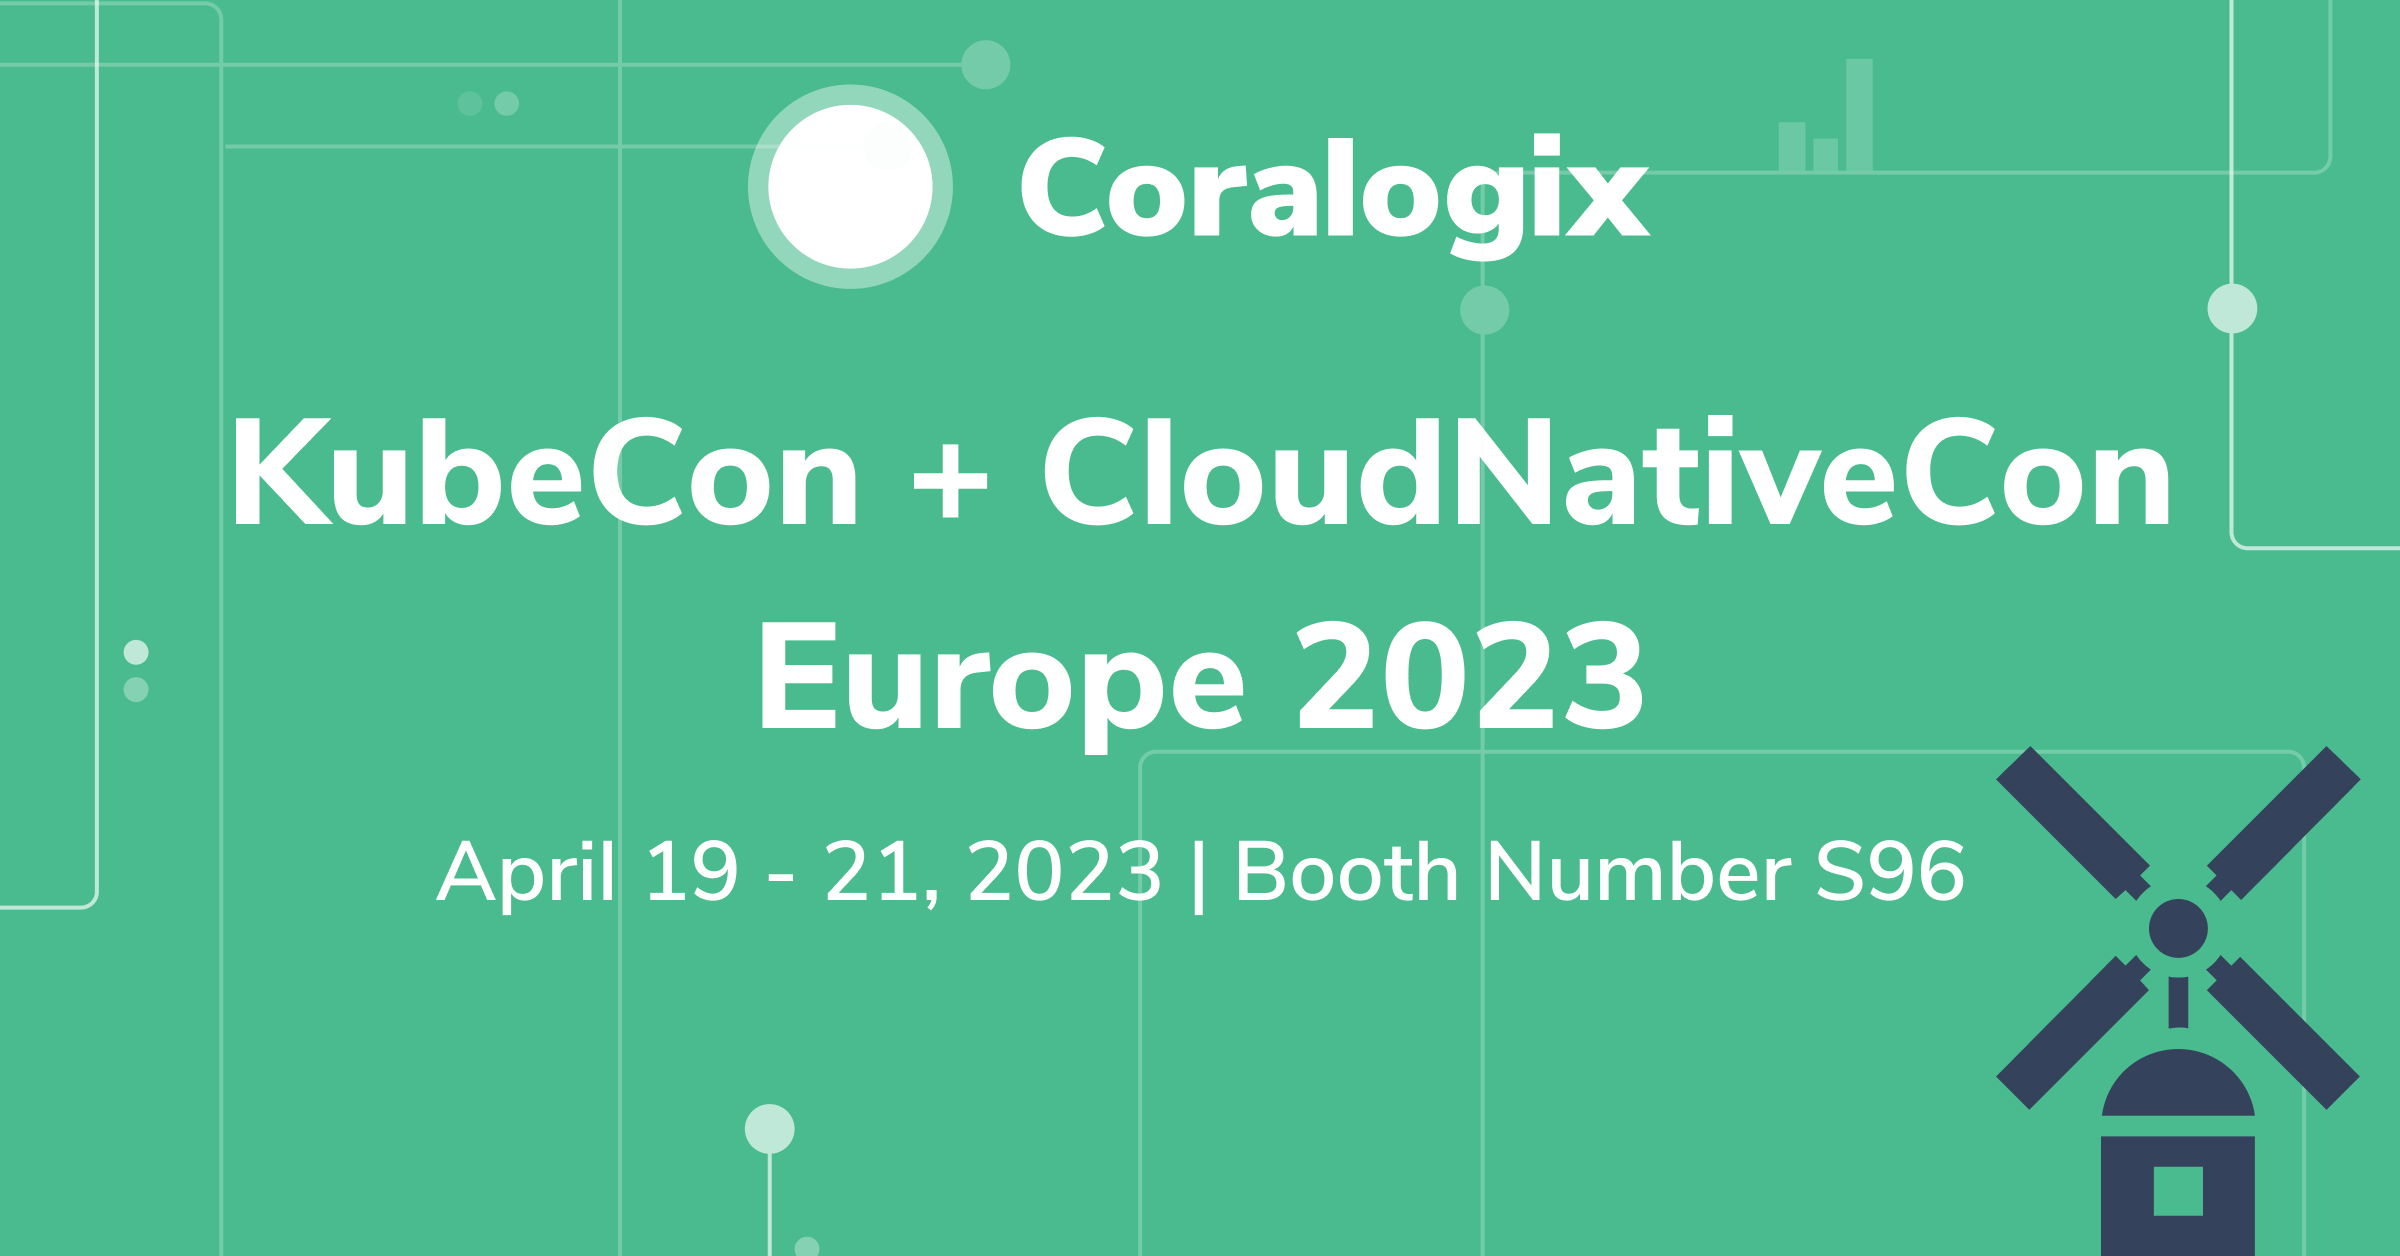 Coralogix at KubeCon + CloudNativeCon Europe 2023